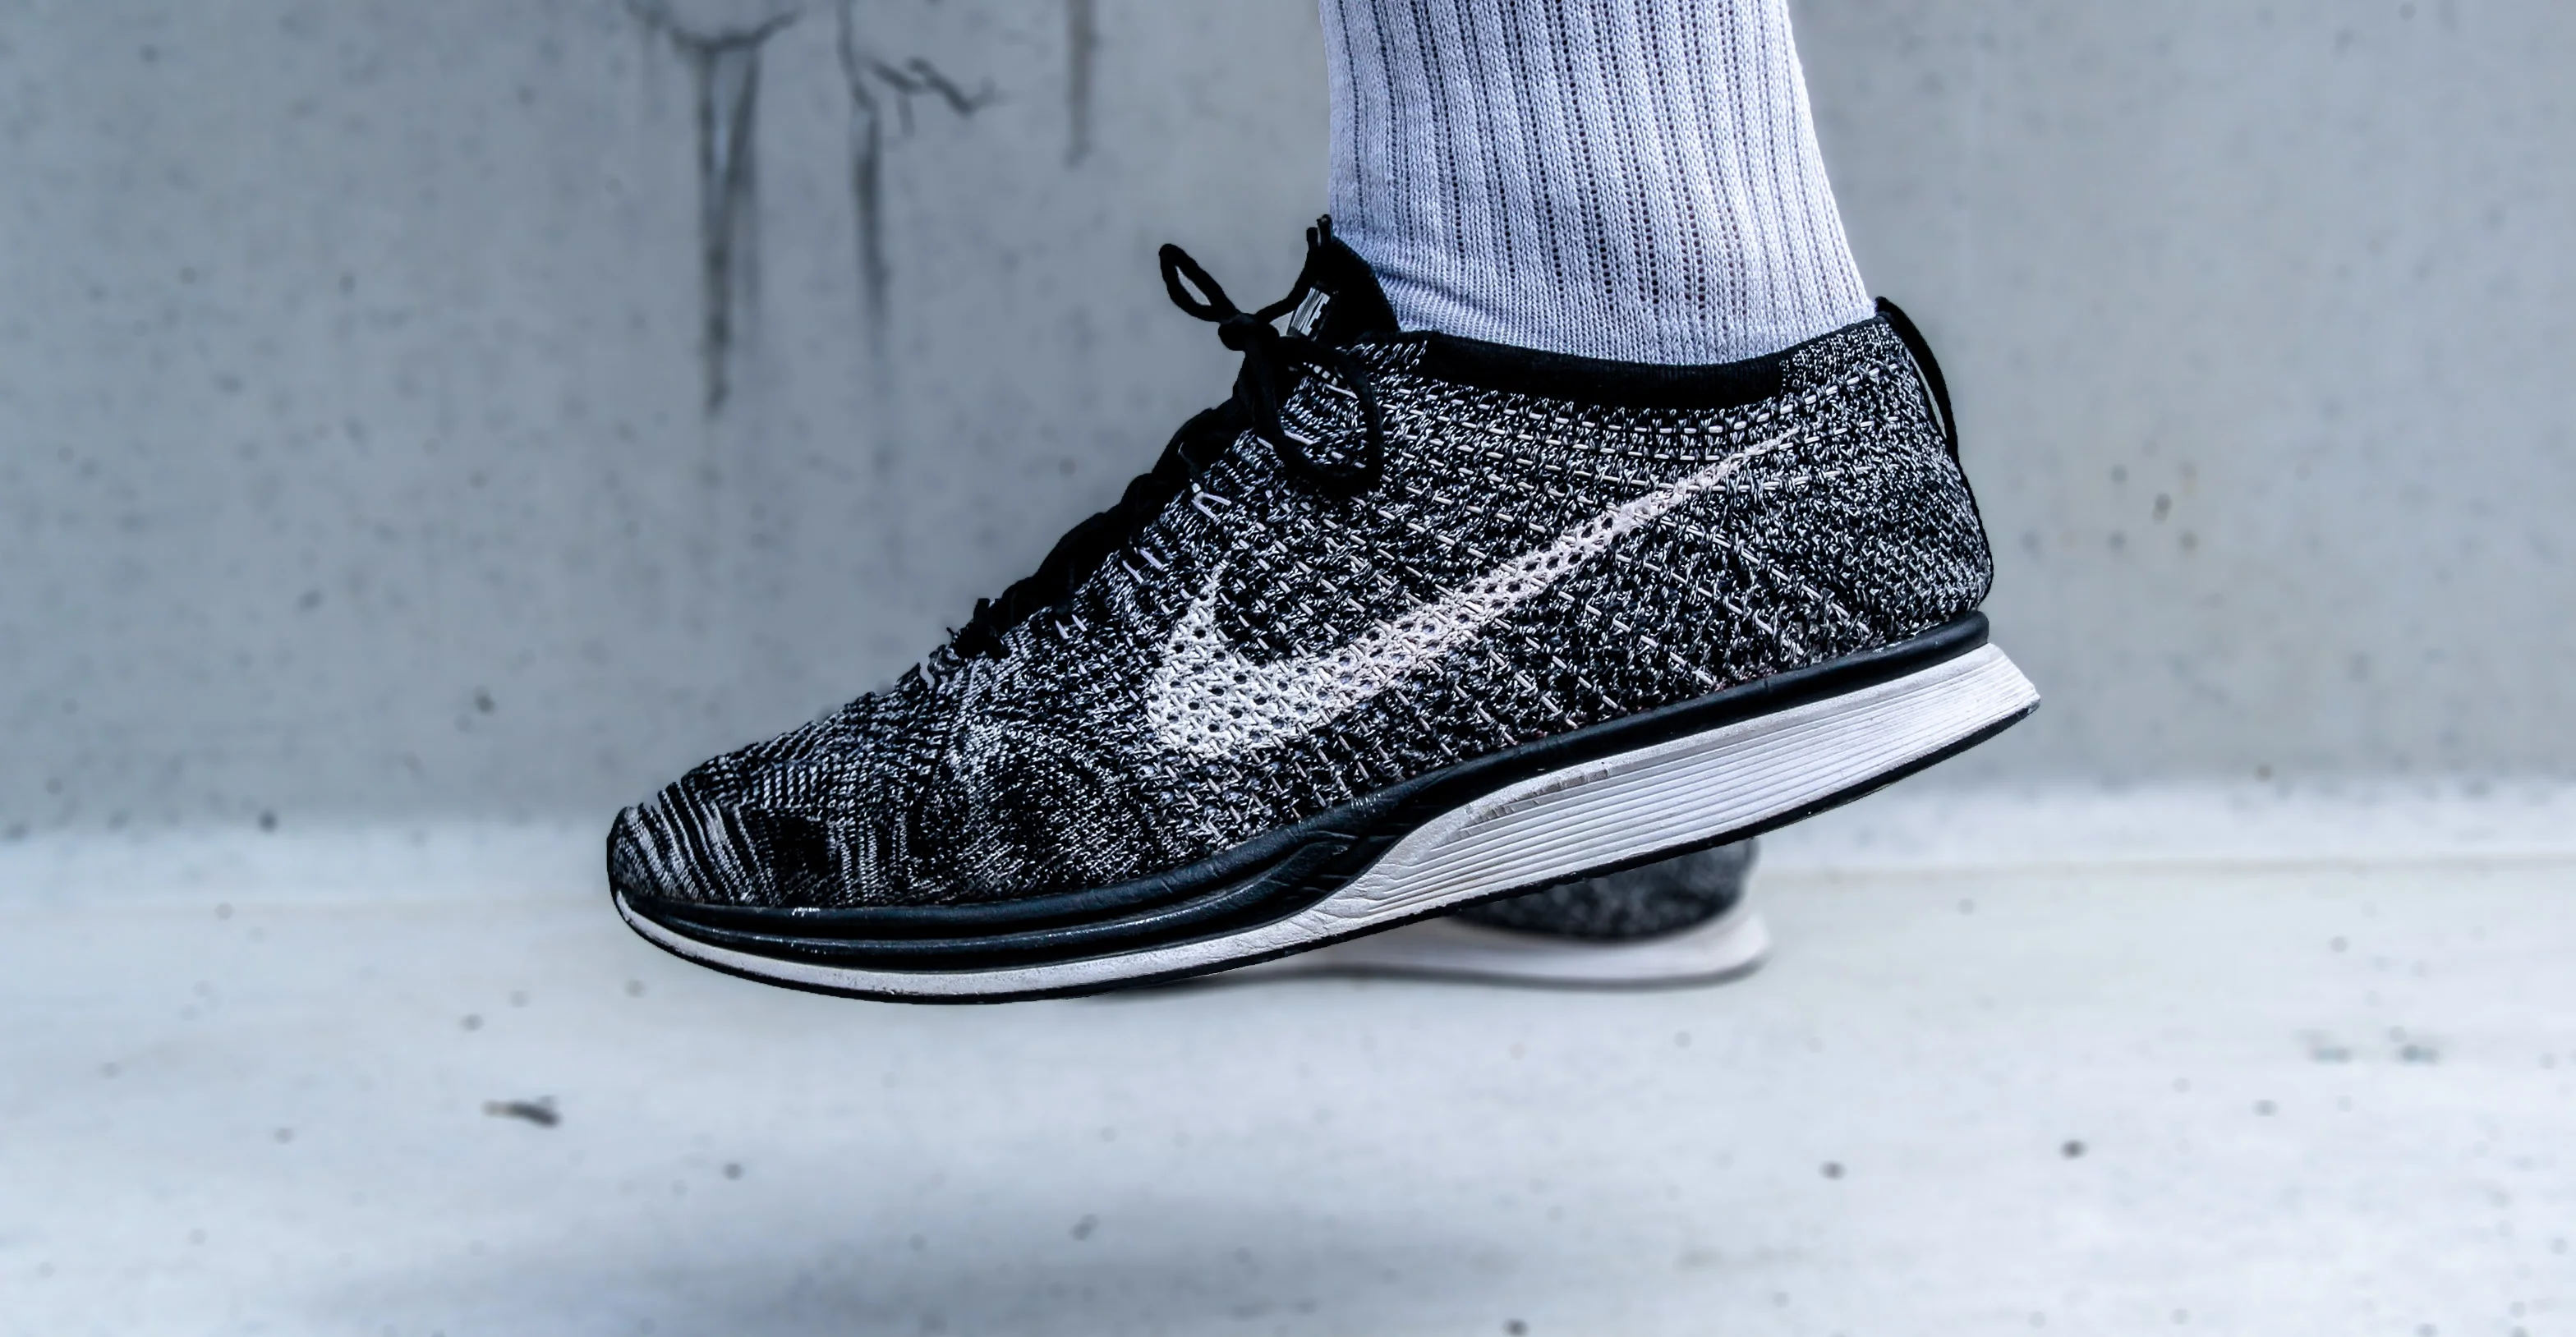 3D Printed textile Nike sneakers